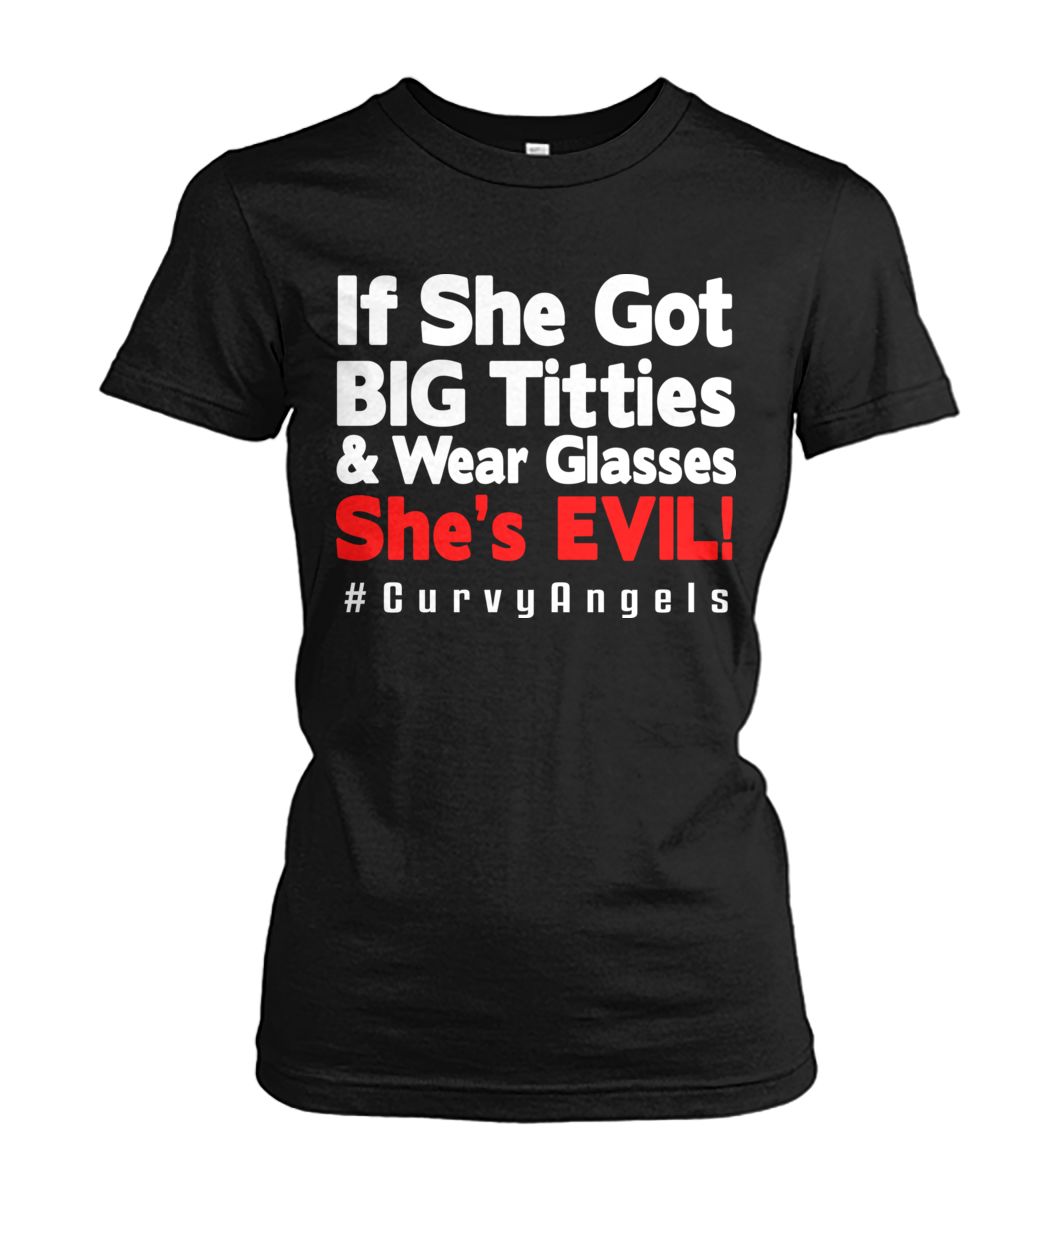 If she got big titties and wear glasses she's evil #curvyangles women's crew tee